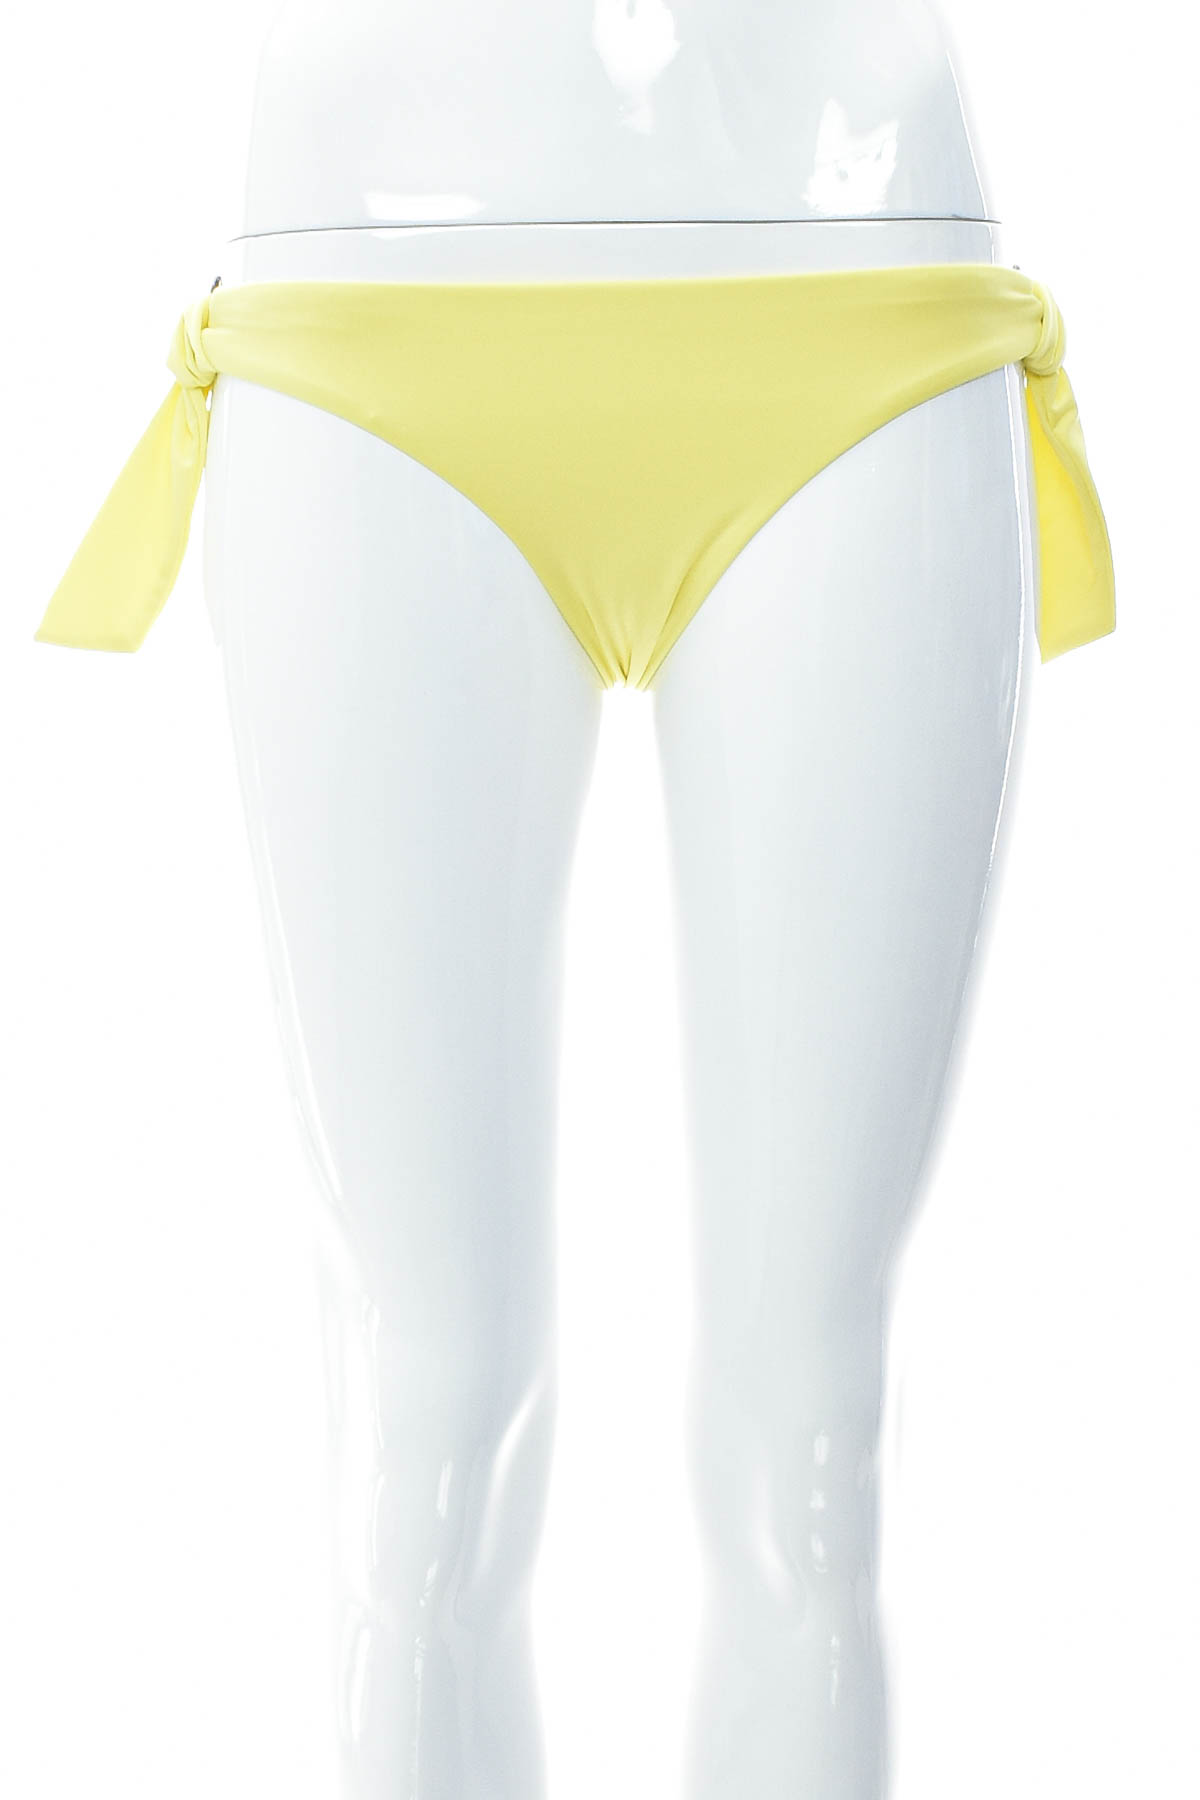 Women's swimsuit bottoms - Seafolly - 0